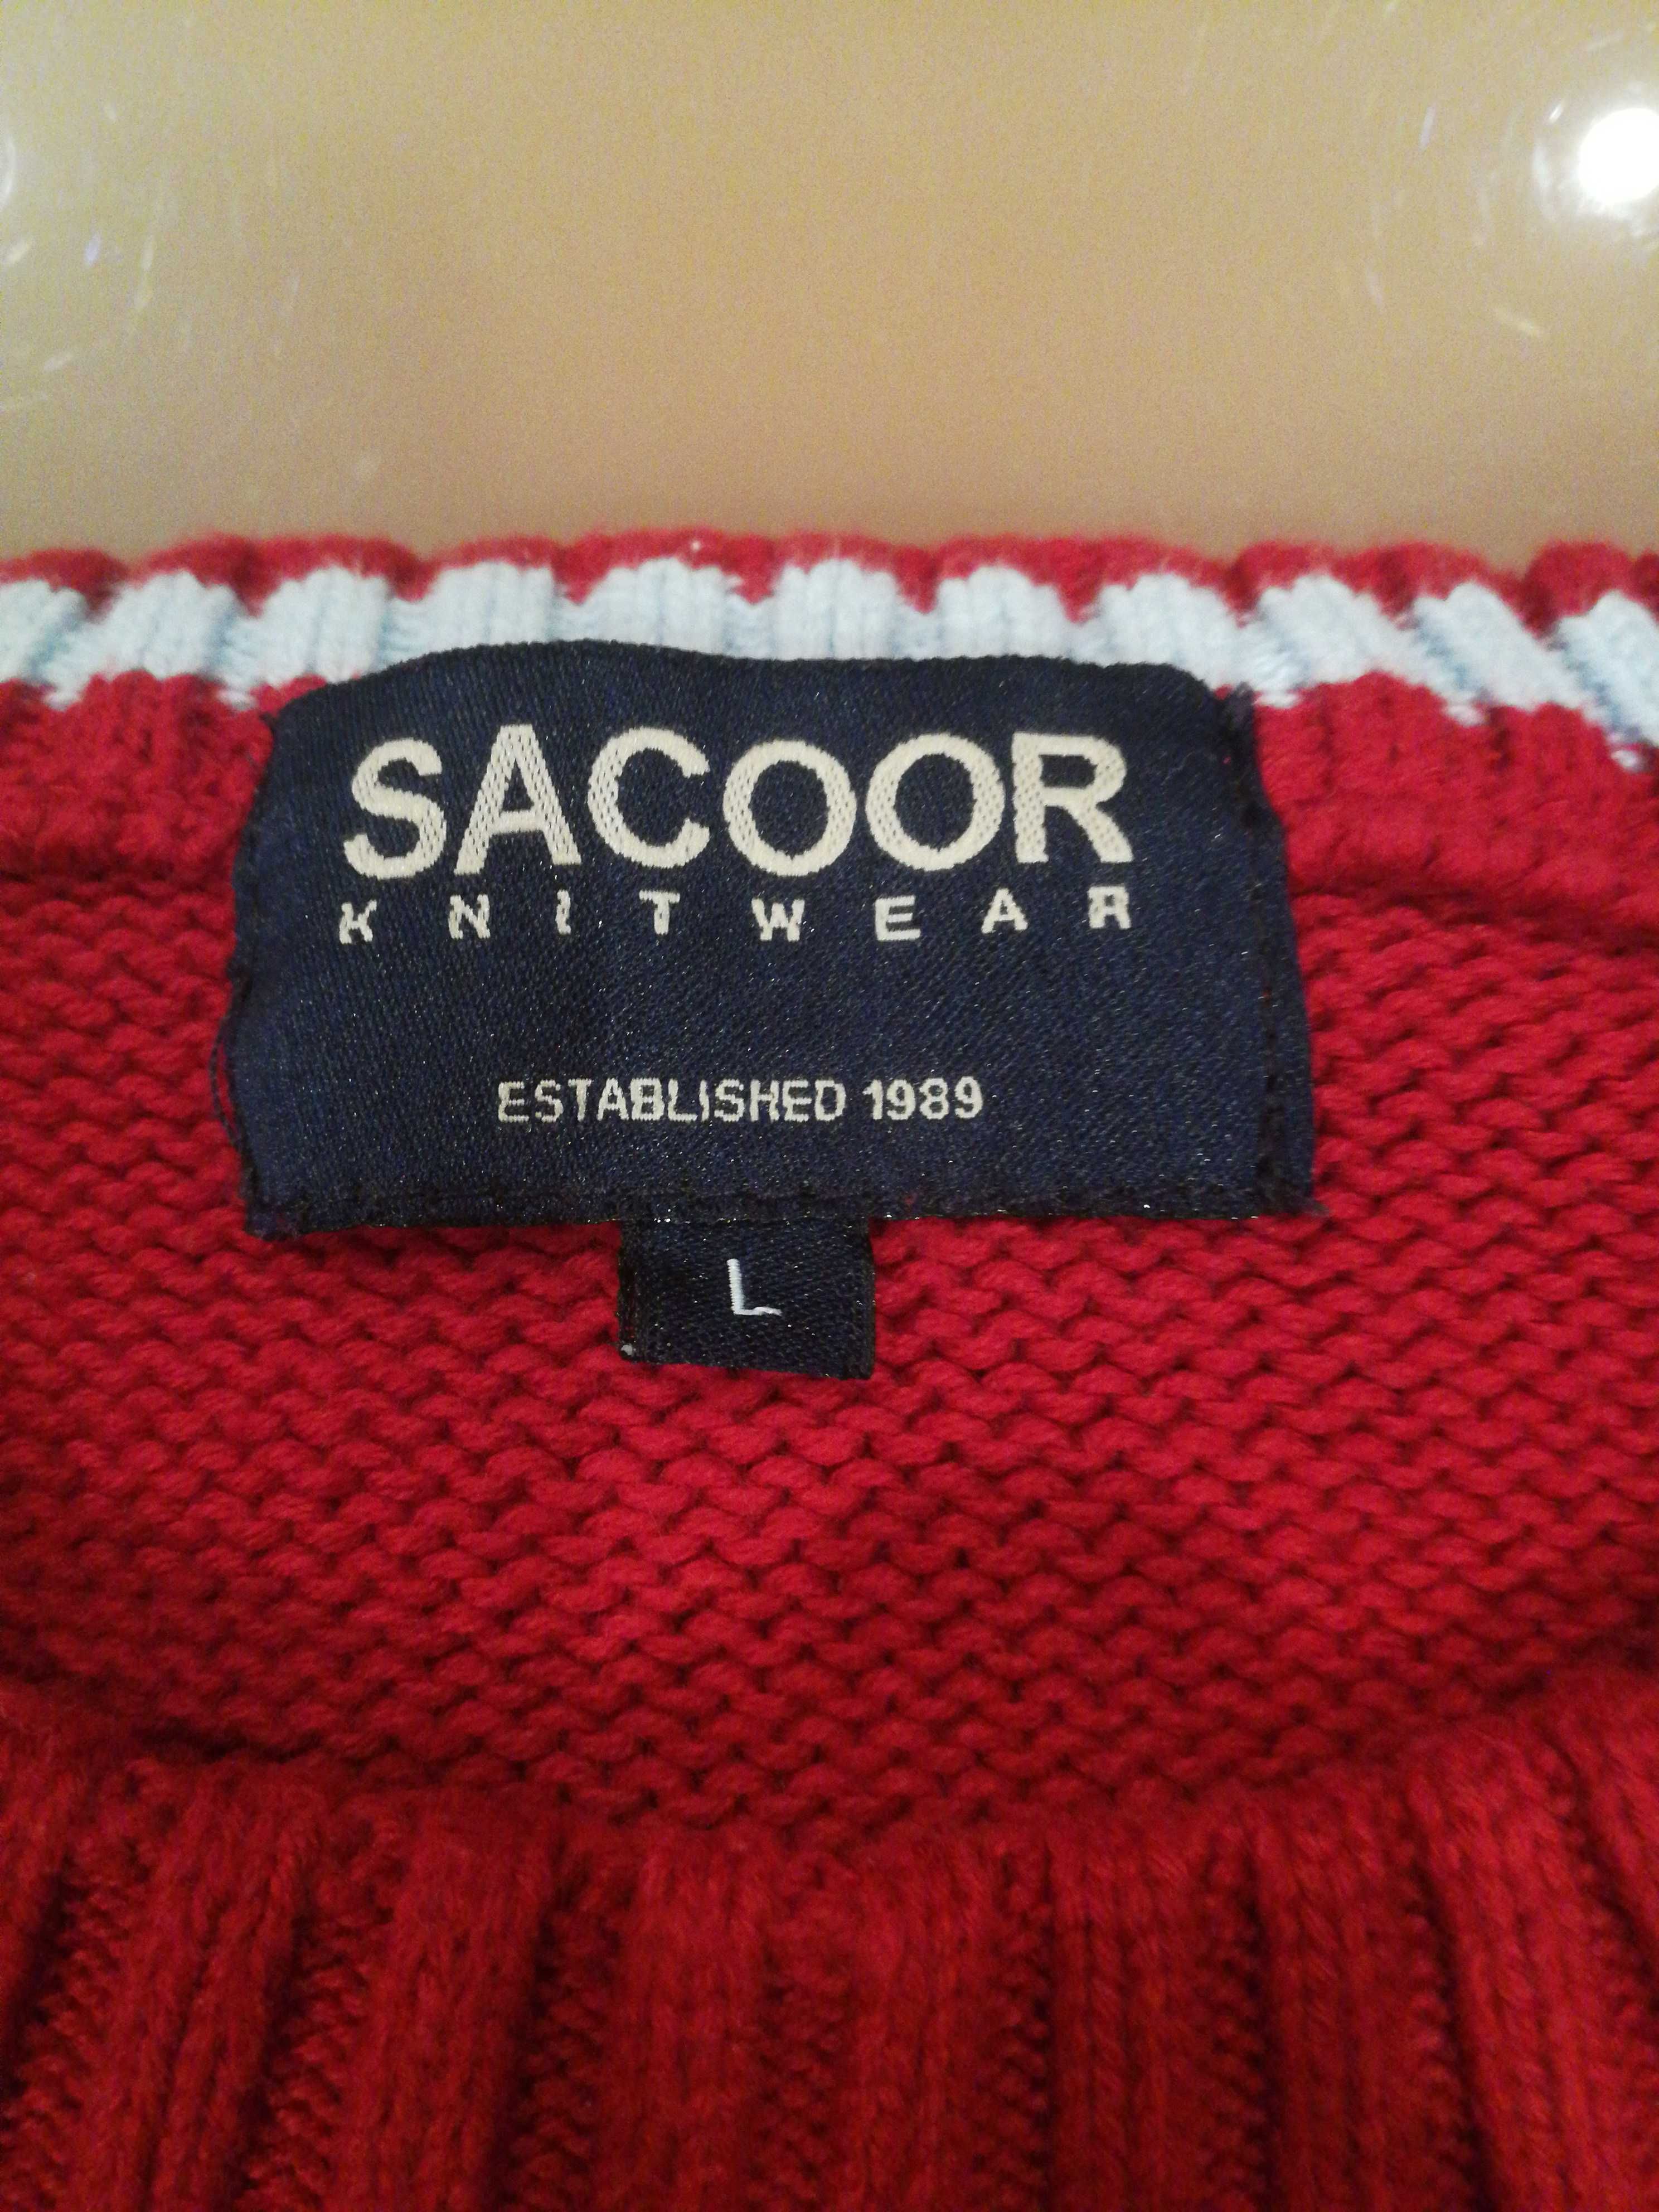 Camisola vermelha Sacoor.